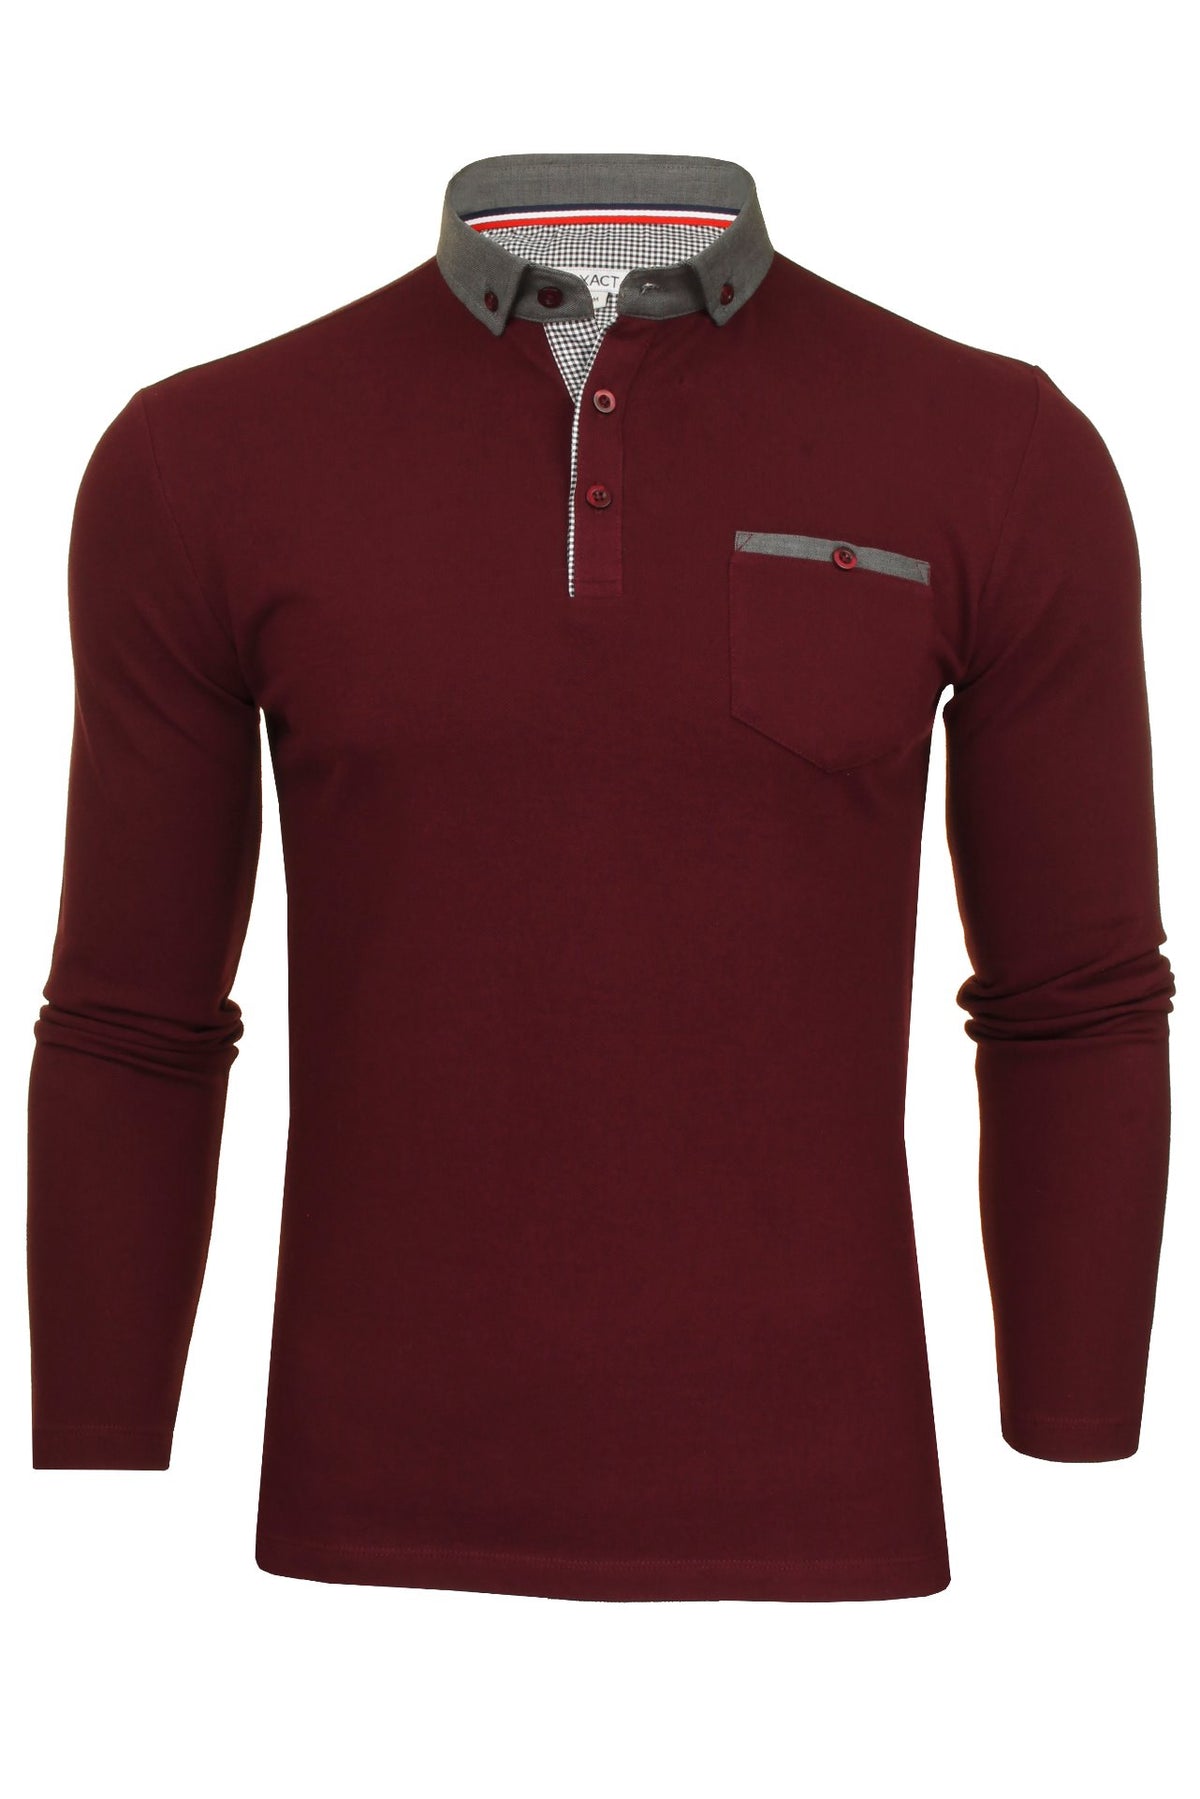 Mens Long Sleeved Button Down Collar Polo T-Shirt by Xact, 01, Xp1026, Dark Burgundy